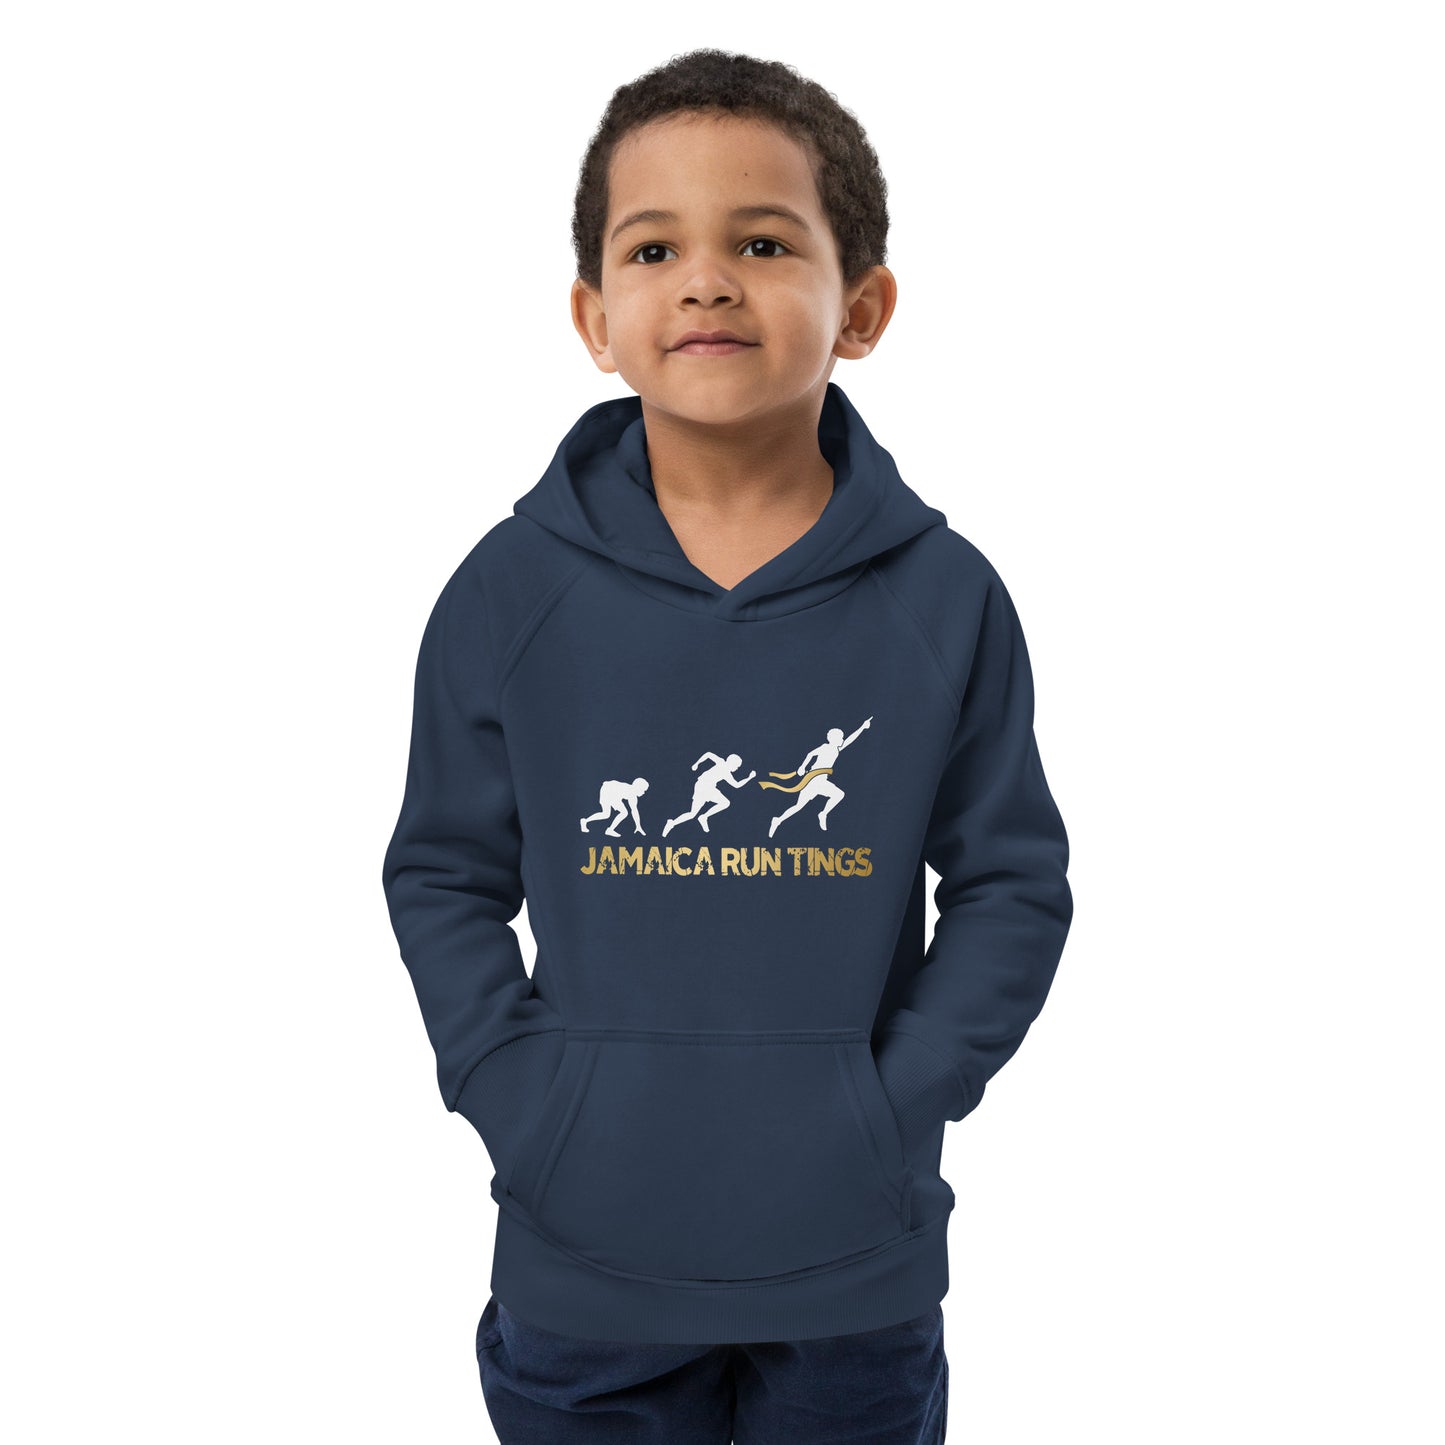 Kids eco Jamaica Run Tings hoodie